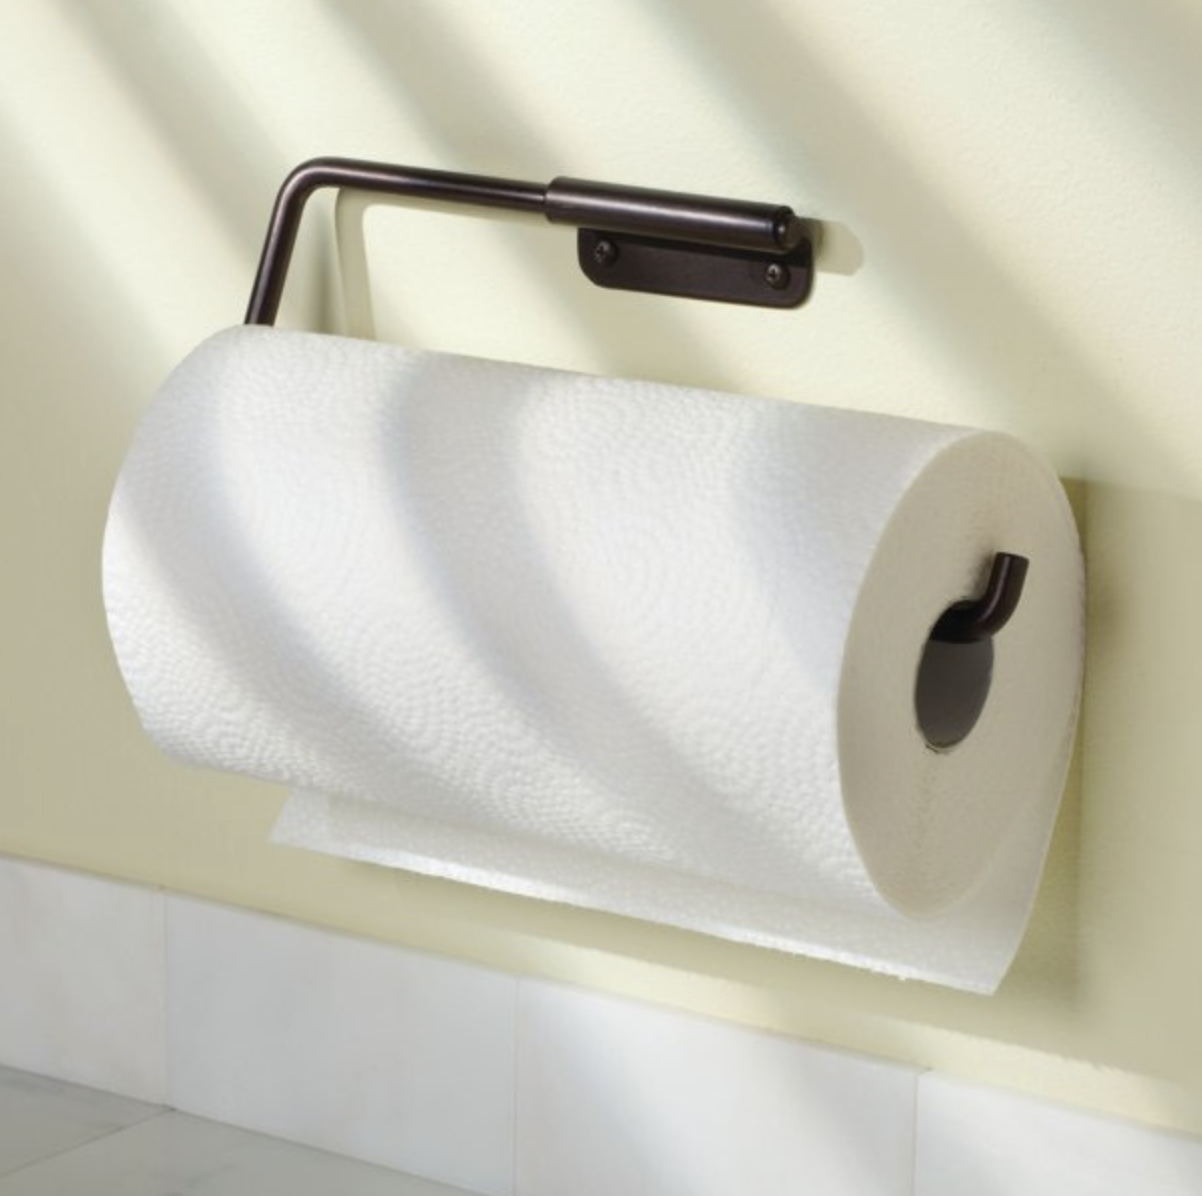 Best Paper Towel Holder in 2020